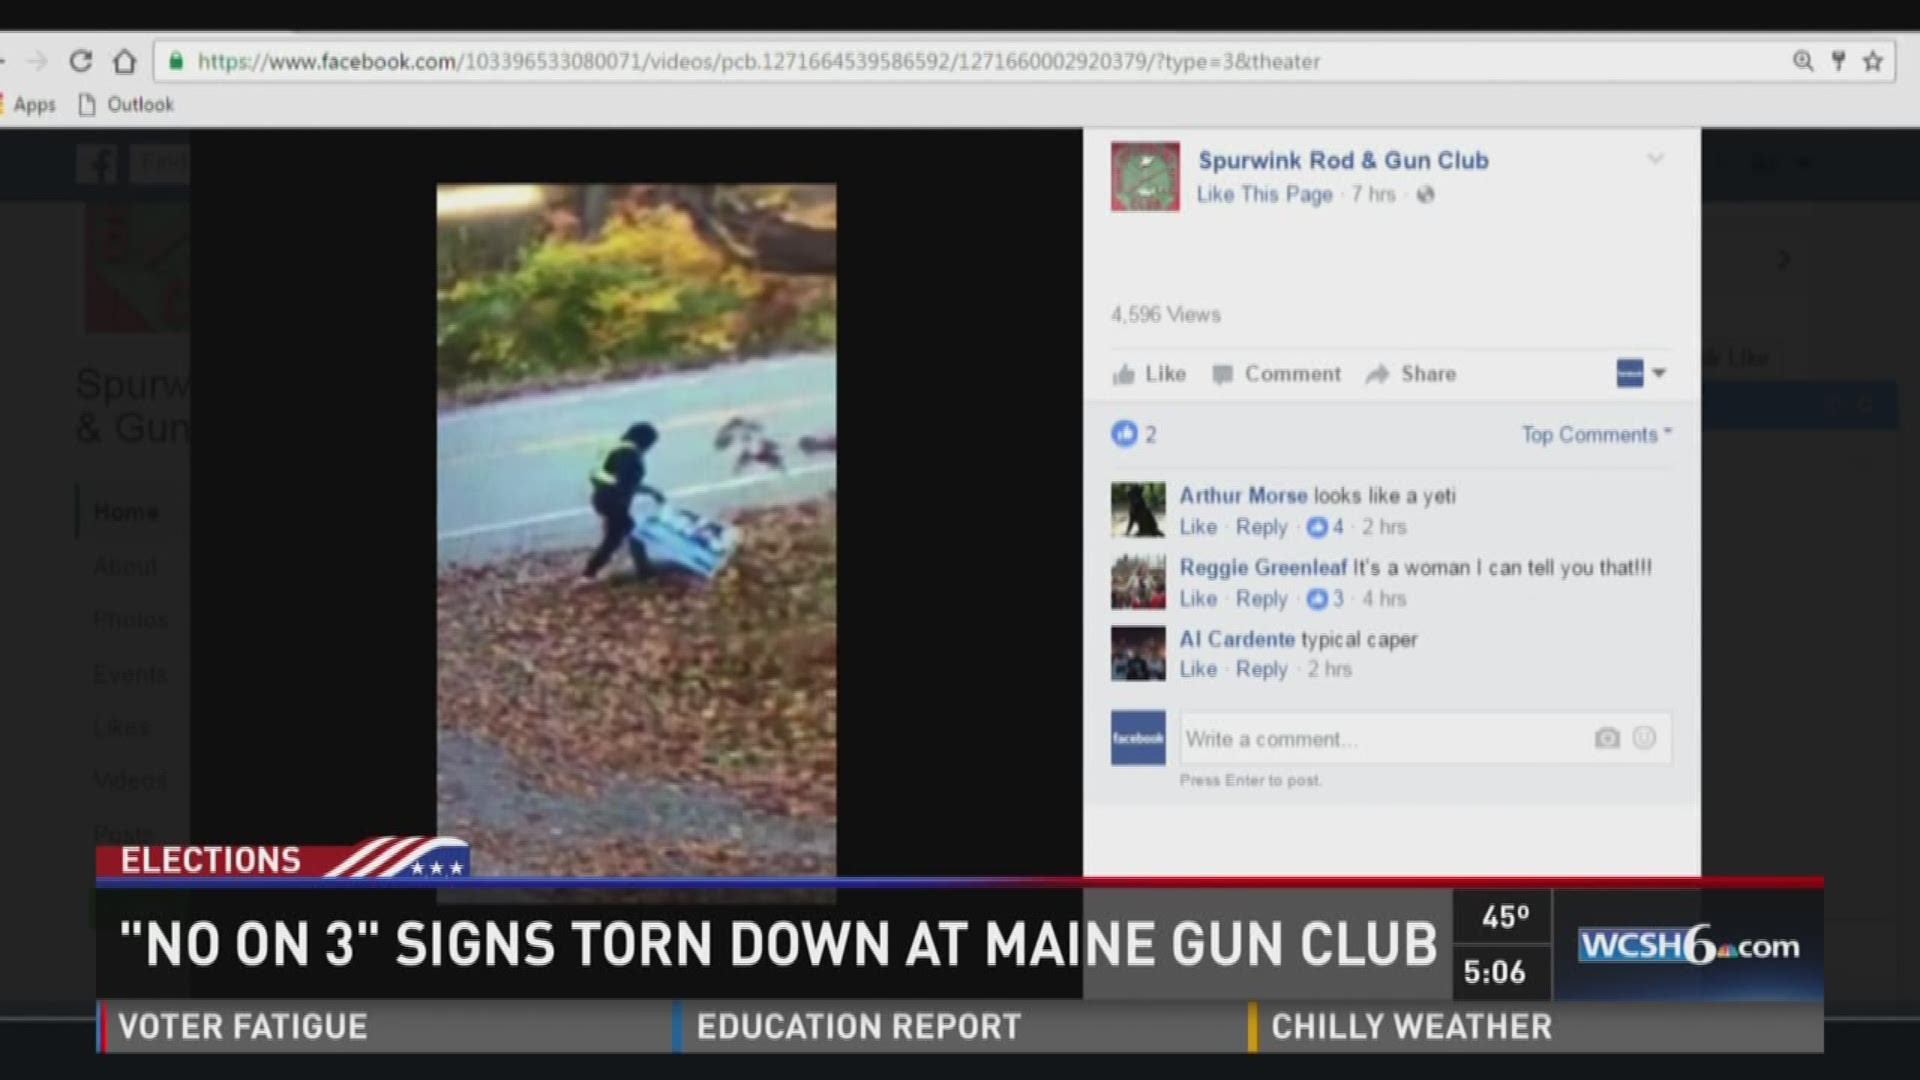  'No on 3' signs torn down at Maine gun club